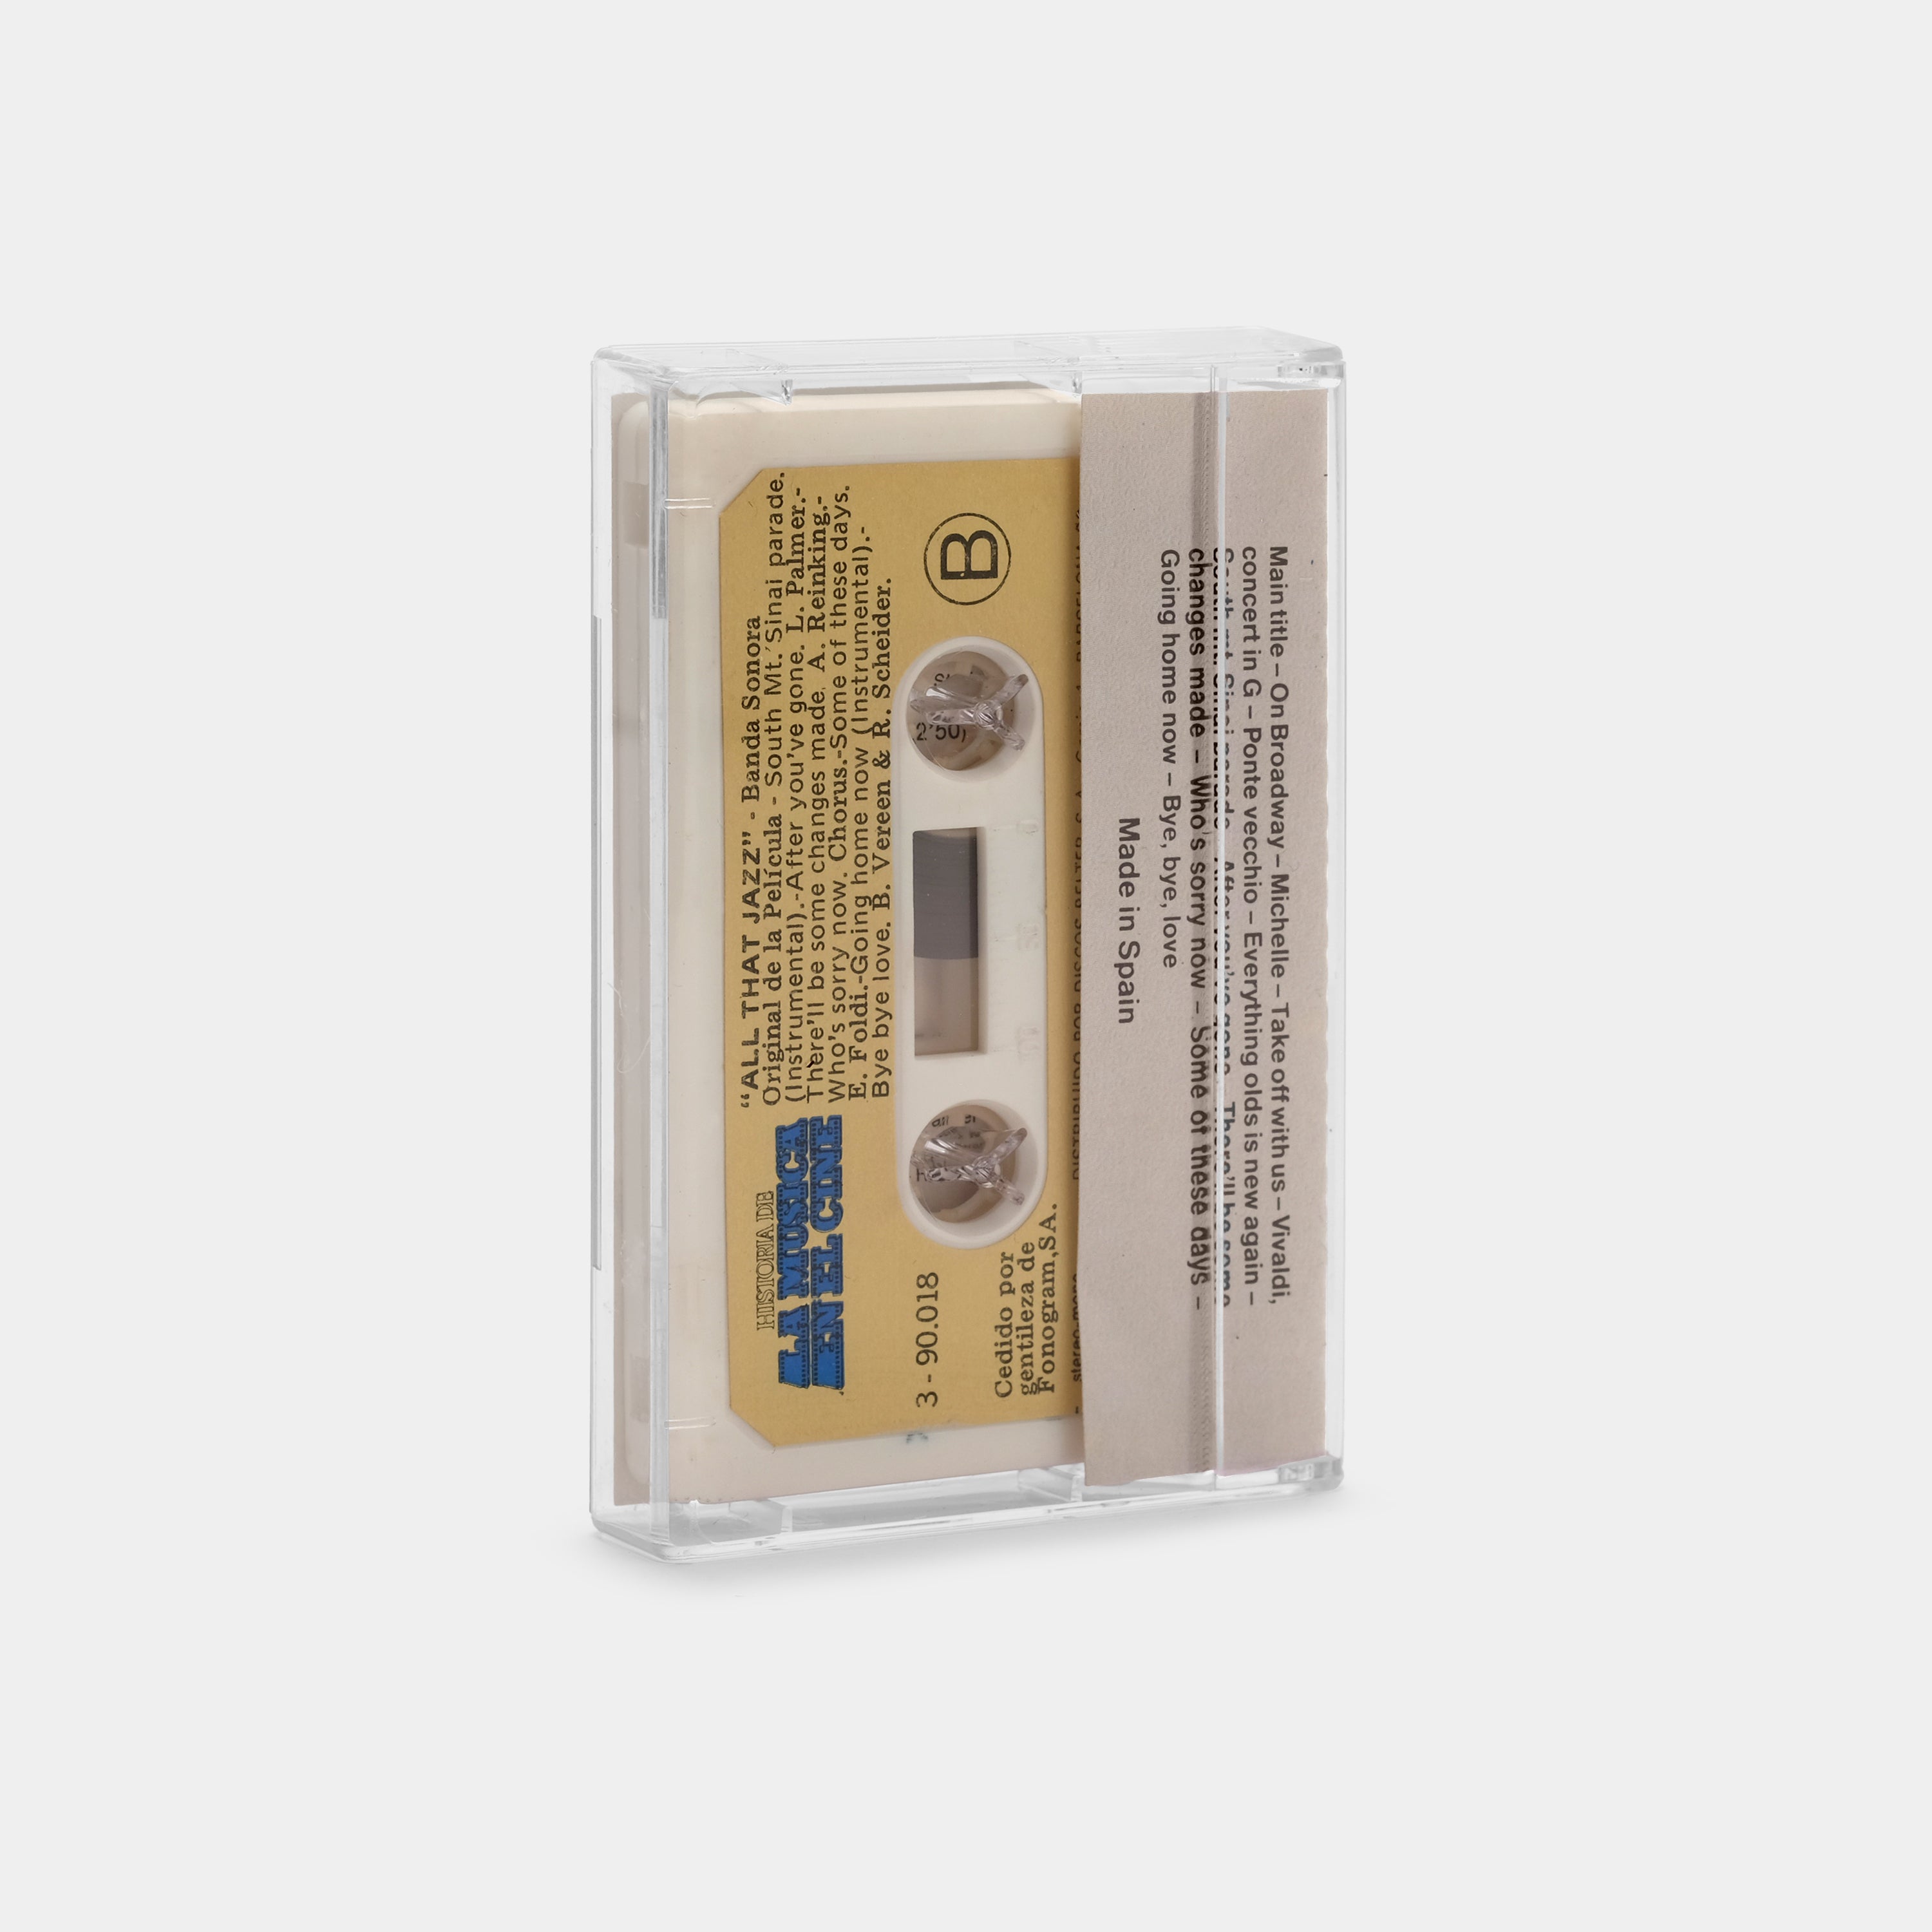 All That Jazz: Original Motion Picture Soundtrack Cassette Tape